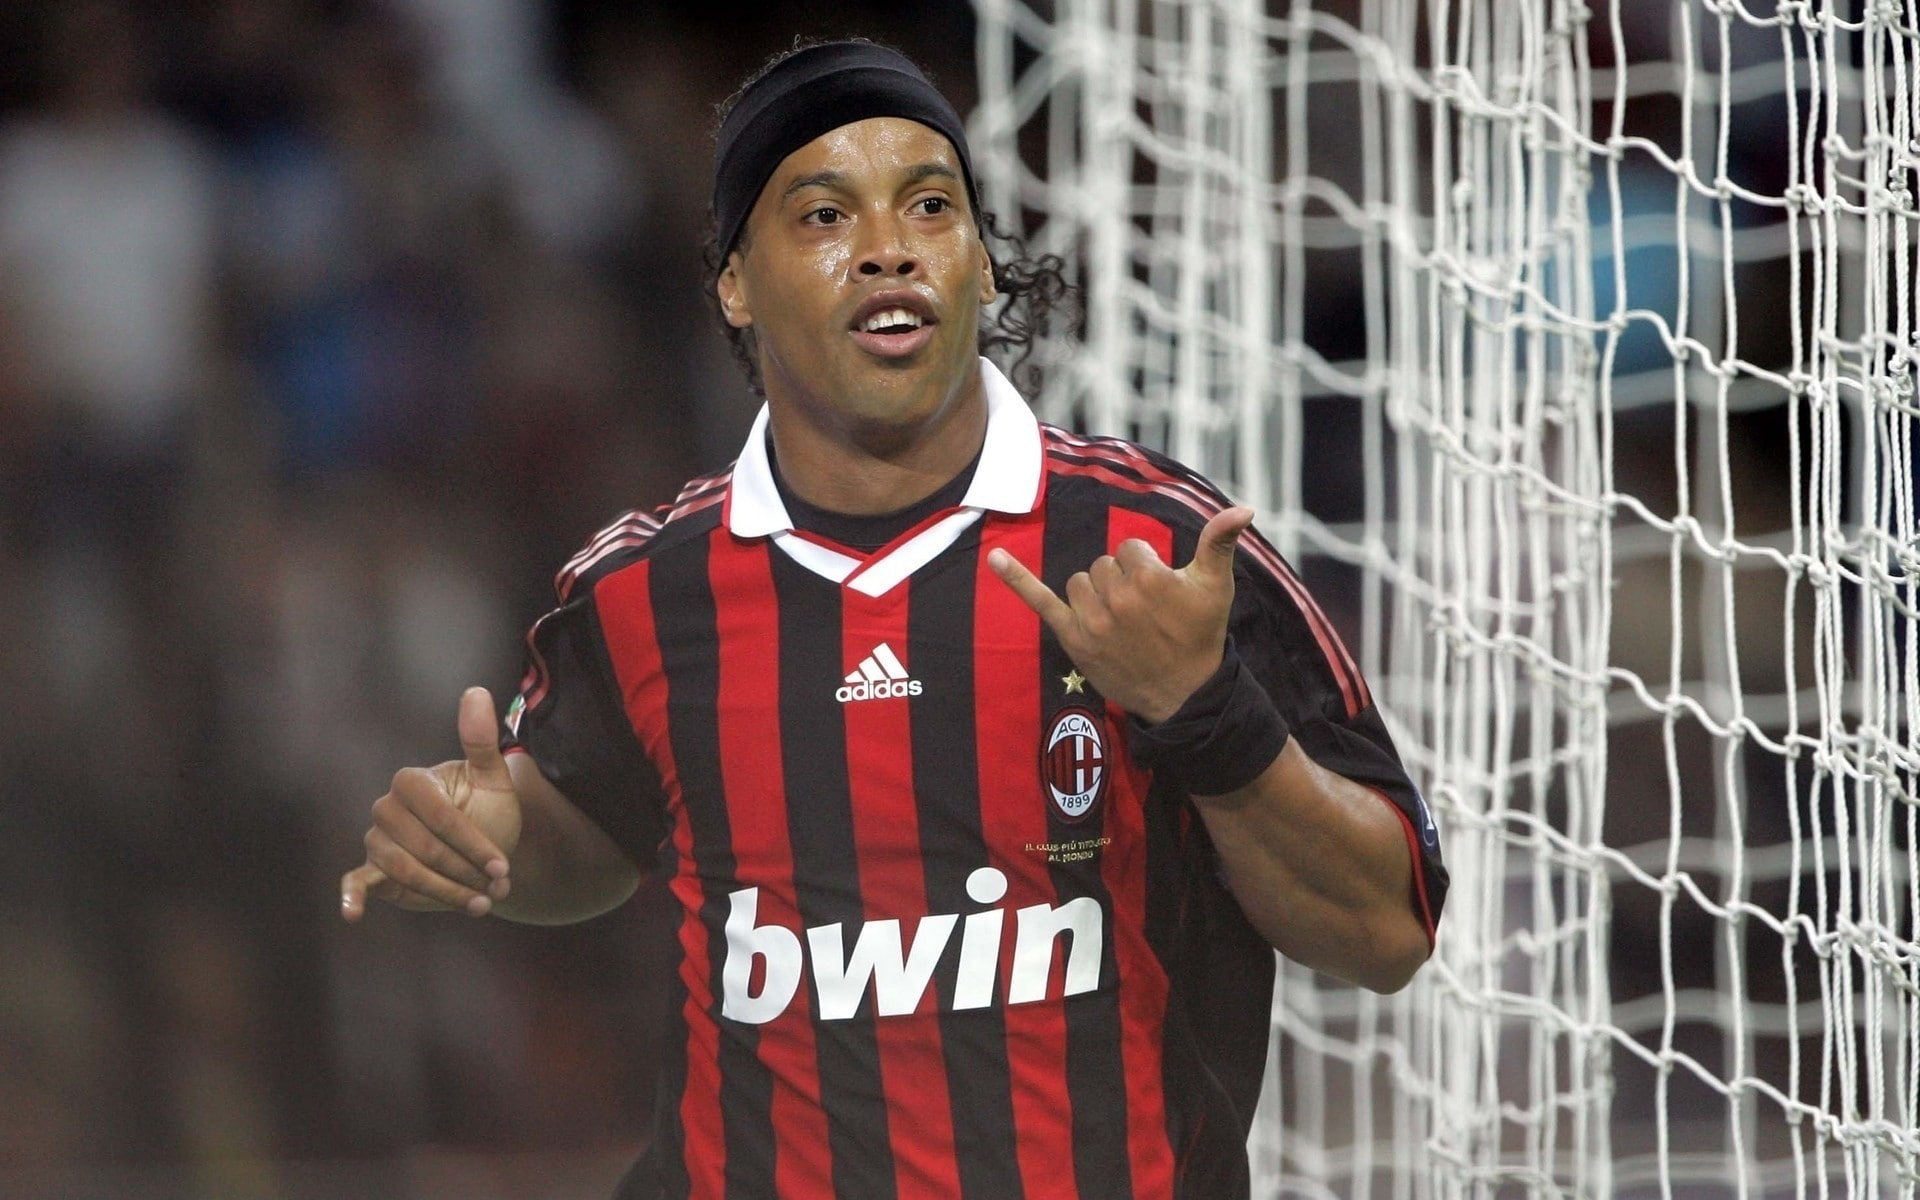 Ronaldinho, Footballer, Negro, Net, Sport, one person, standing